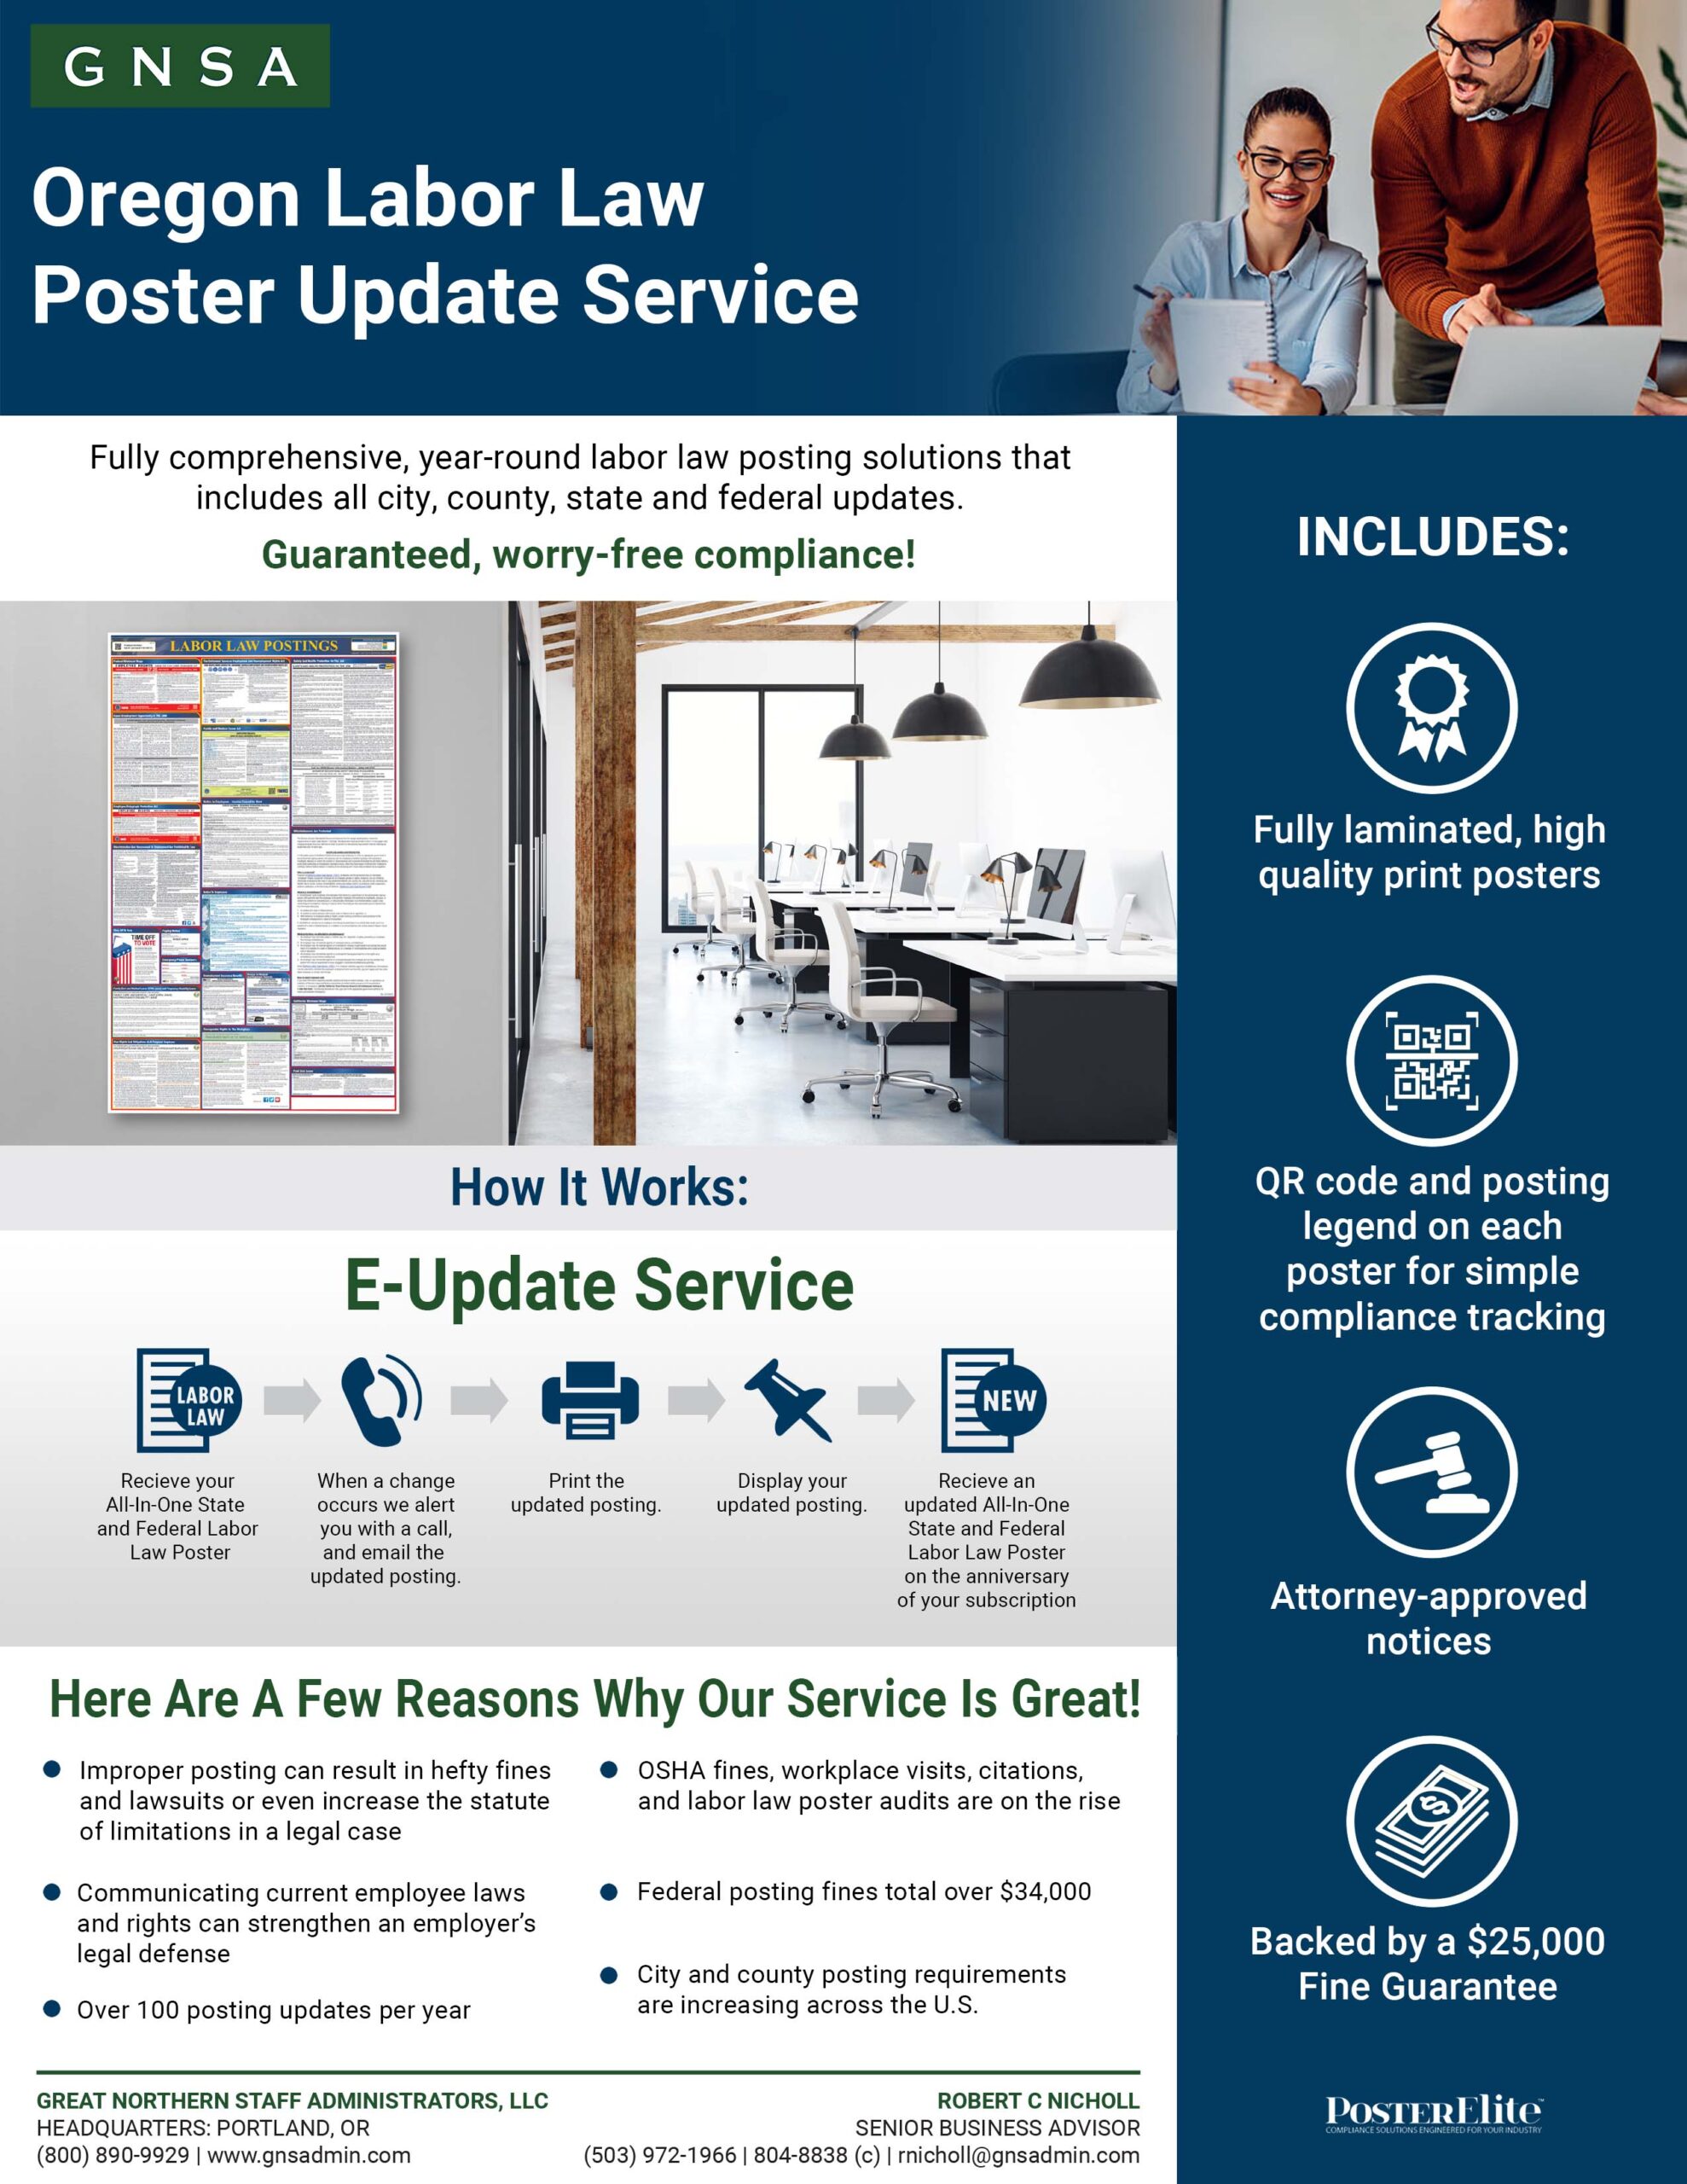 GNSA Poster Prospect Overview